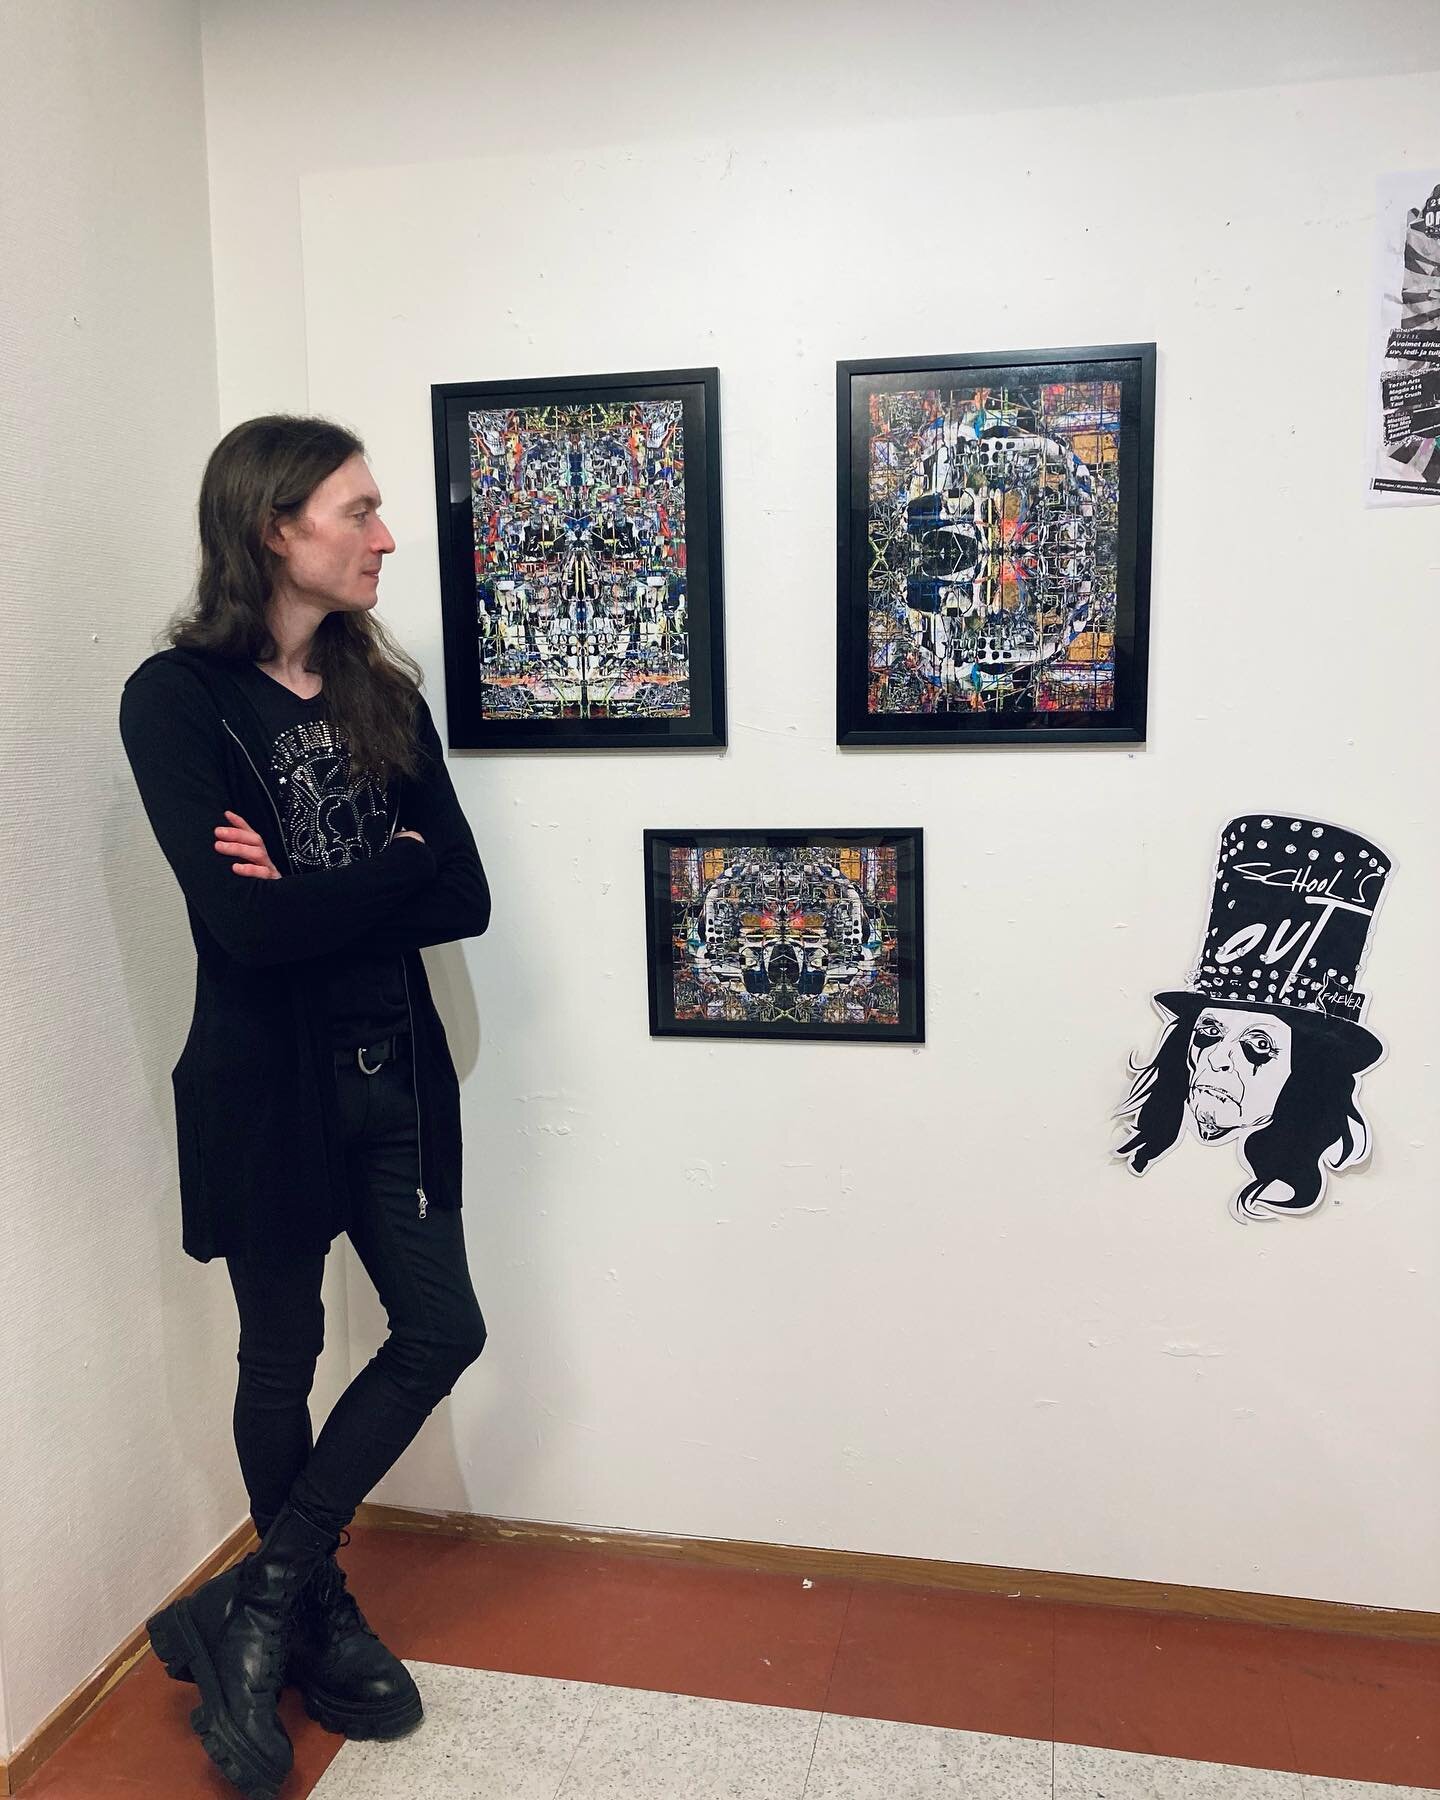 My prints are hanging next to Alice Cooper in the Print Matters exhibition @helsinkiurbanart 
 
On view through 6 April
 
📍Helsinki Urban Art / Pasila Urban Art Center
Opastinsilta 6AB, pedestrian level
00520 Helsinki, Finland

WED 12-8 PM
THU 12-6 